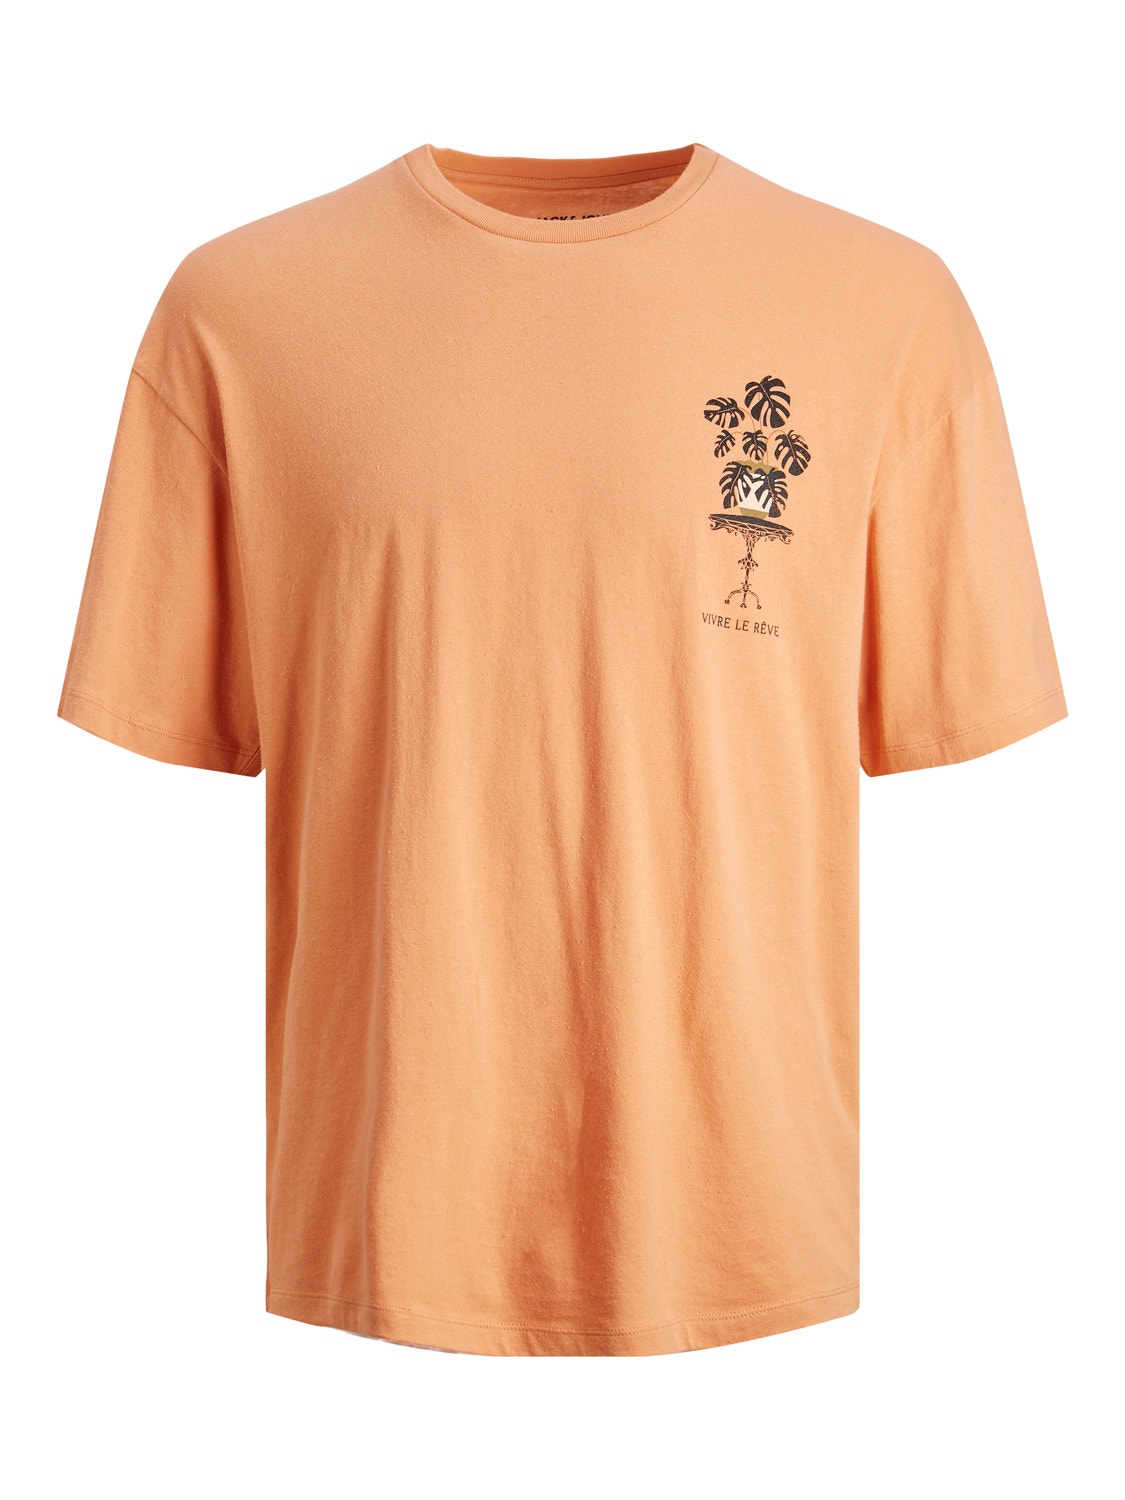 Jack & Jones Printed Crew neck T-shirt -Copper Tan - 12245262